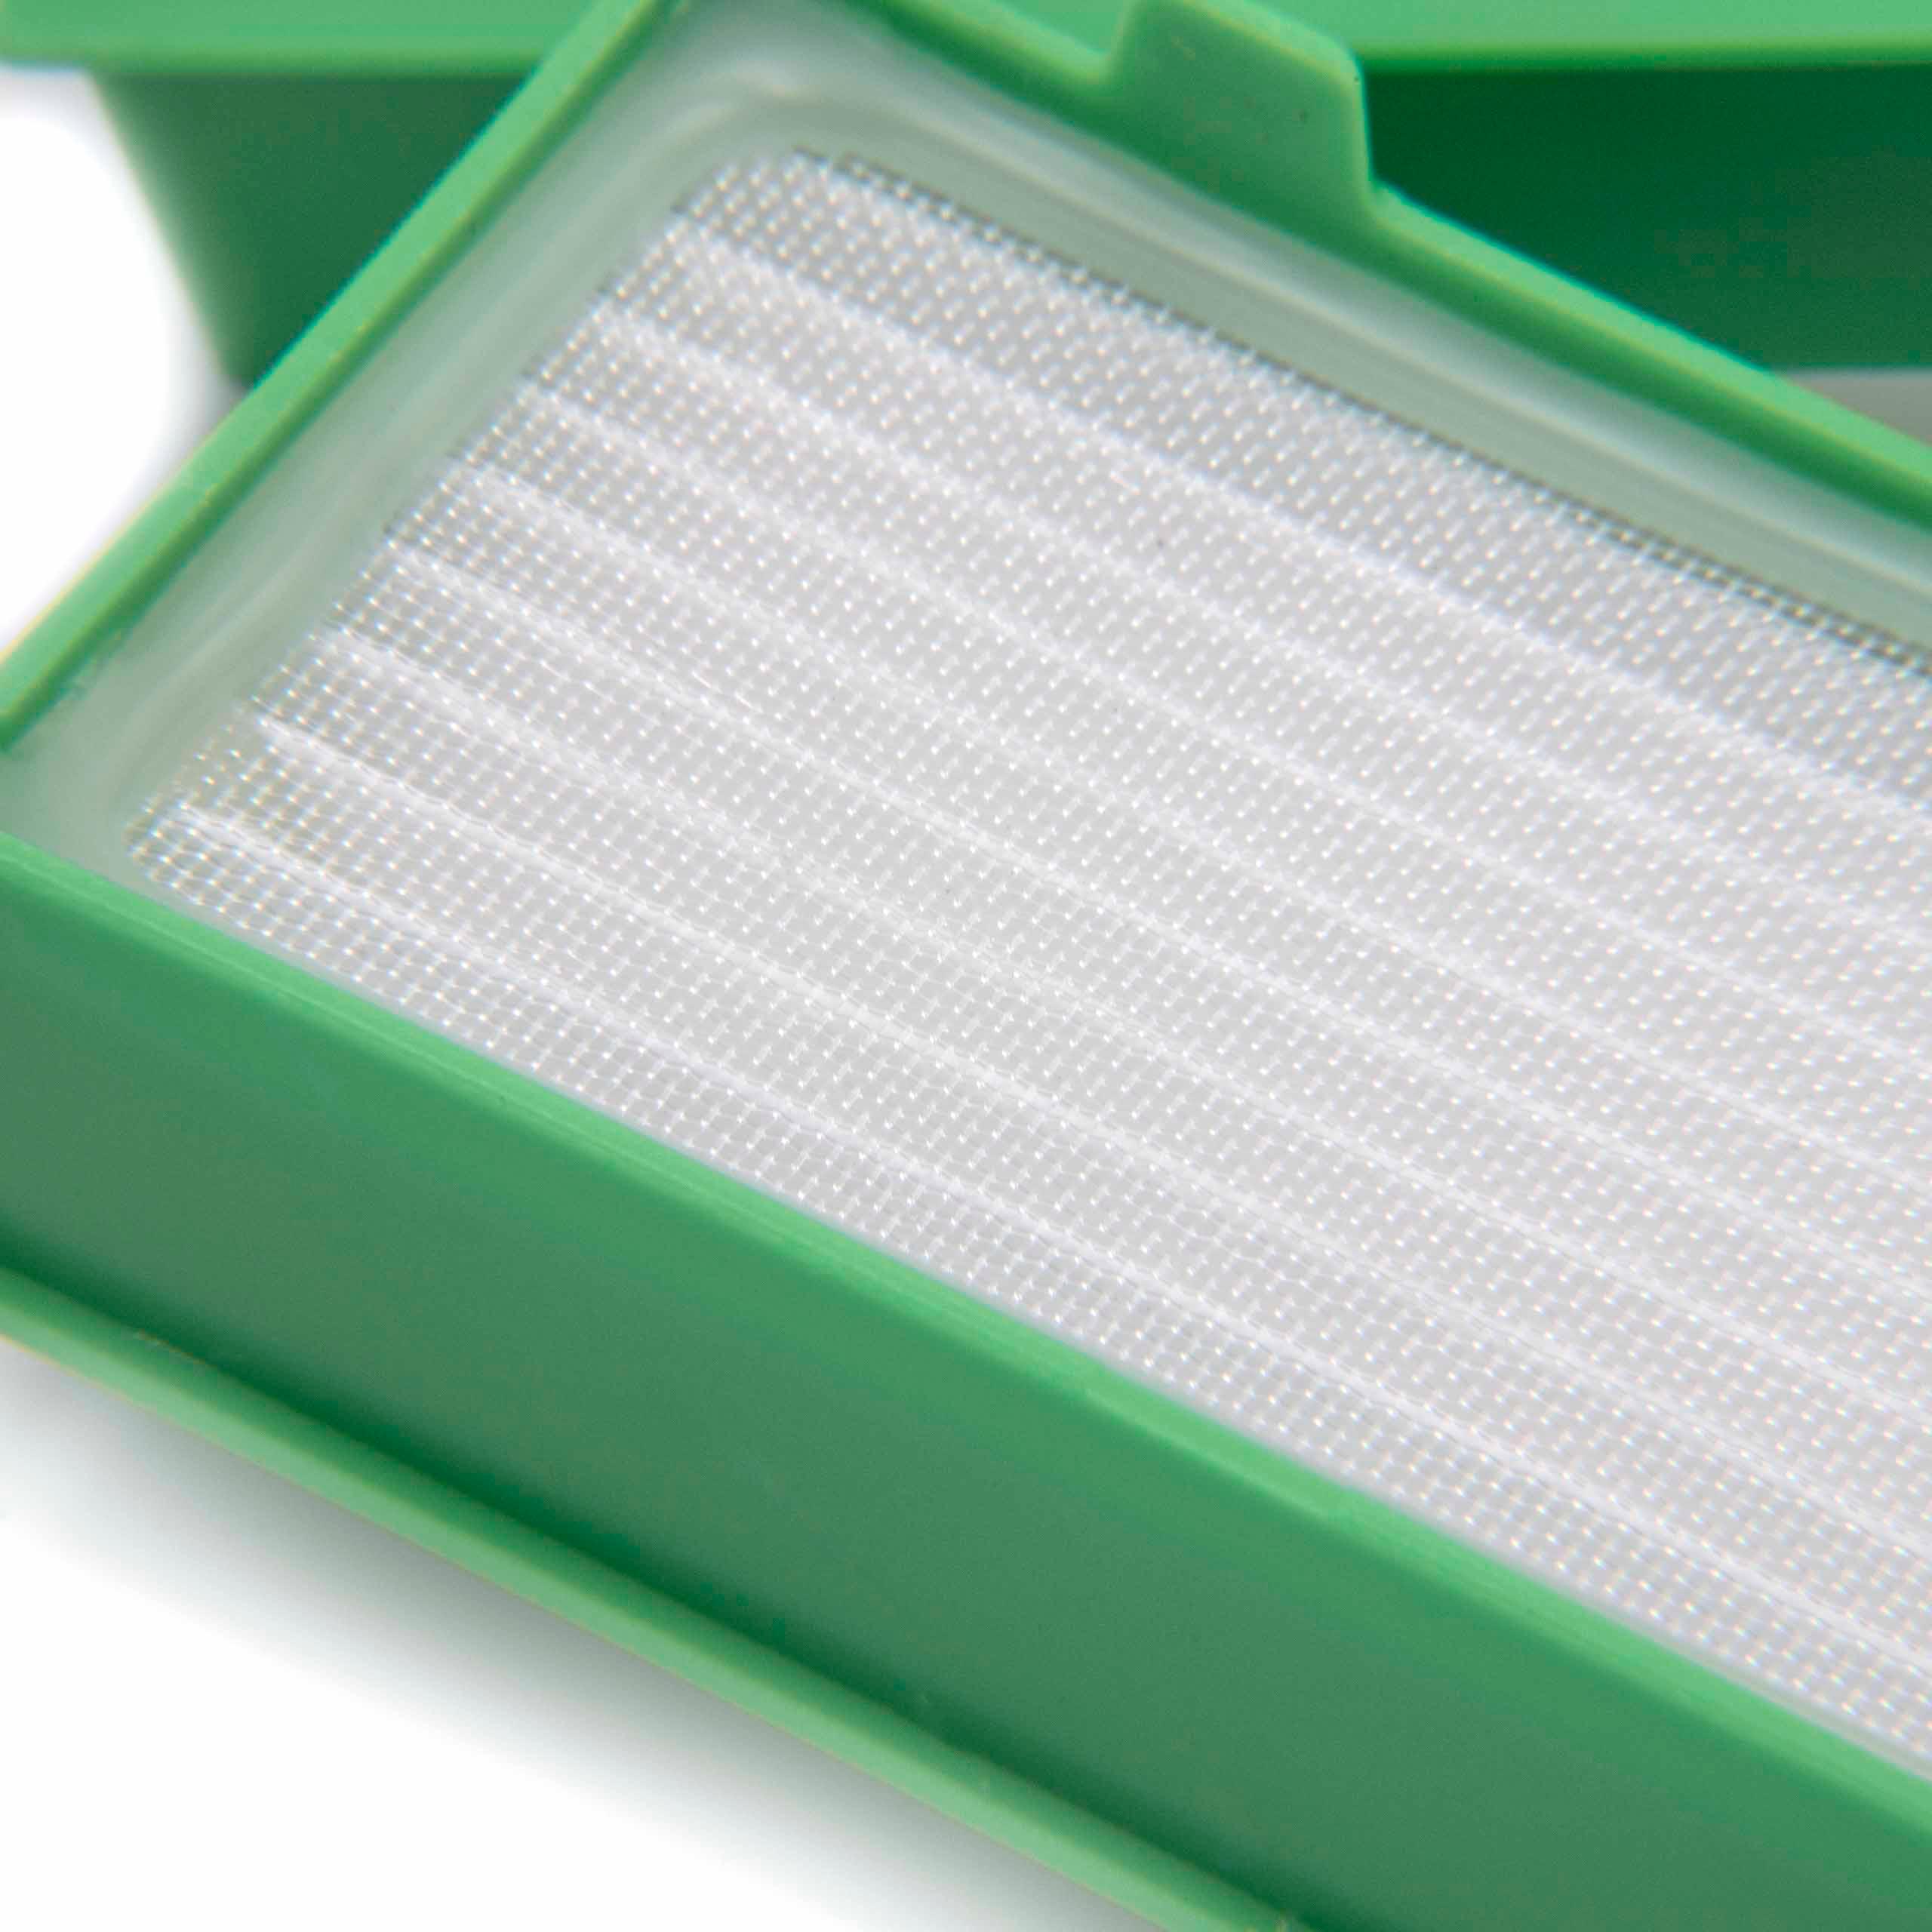 6x Filtro per aspirapolvere Vorwerk folletto - filtro HEPA, bianco / verde